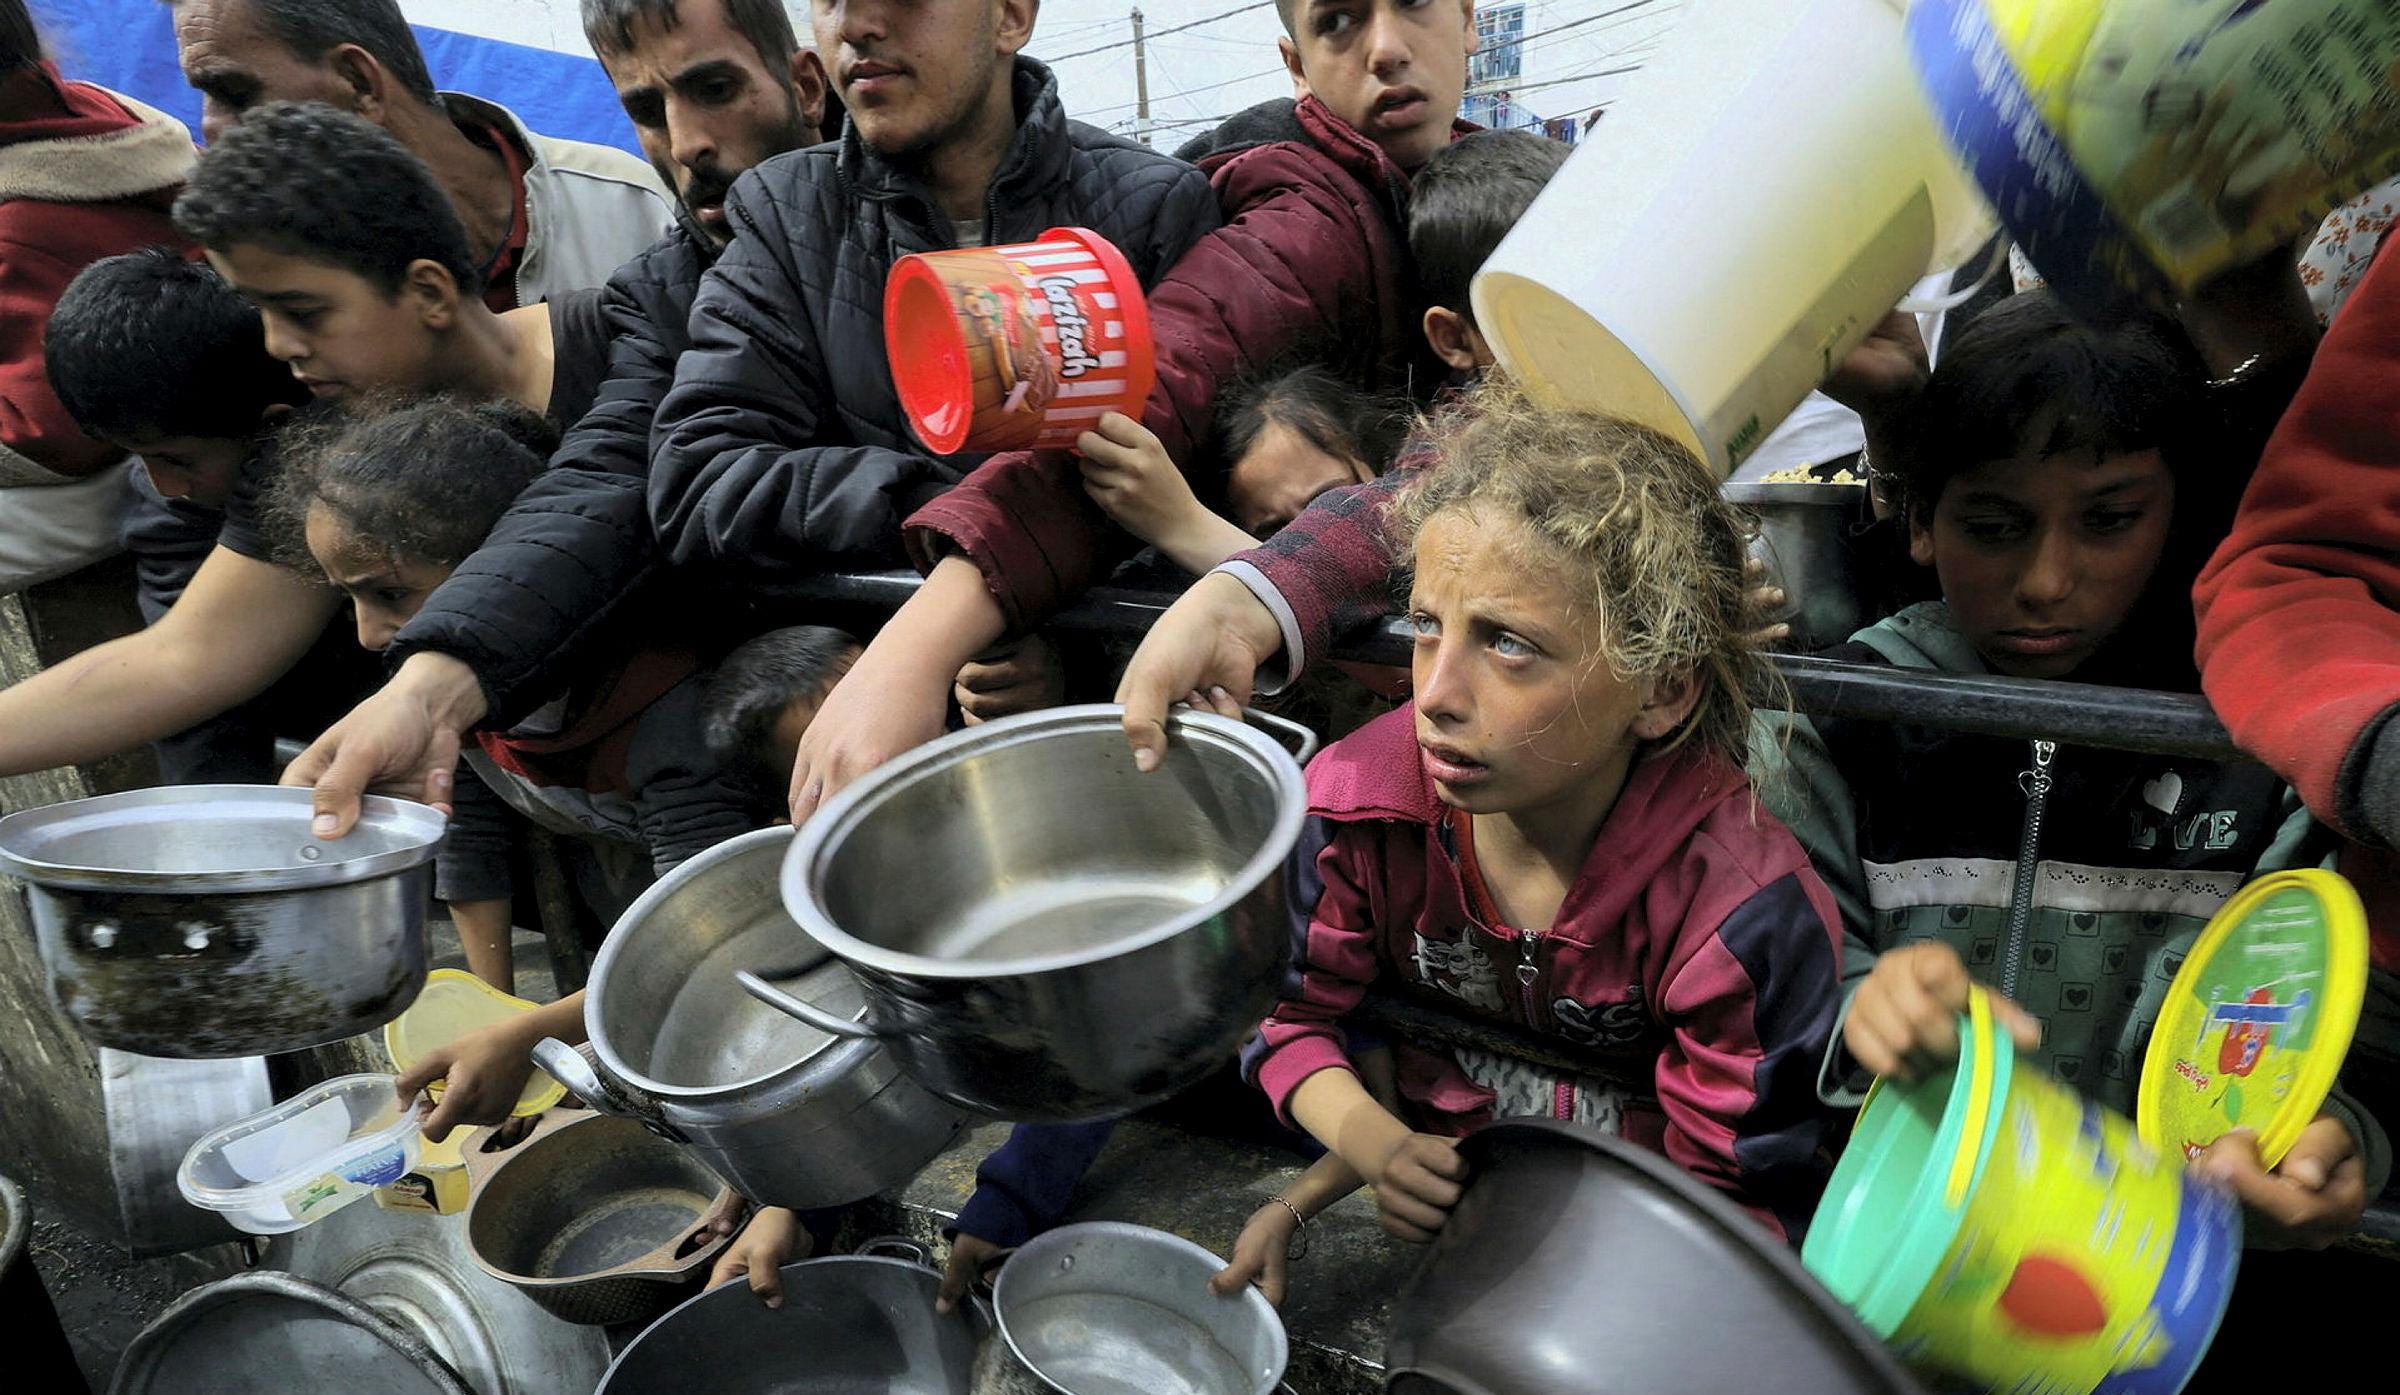 L'Onu accusa Israele per la catastrofe umanitaria a Gaza: "La fame è un crimine di guerra"